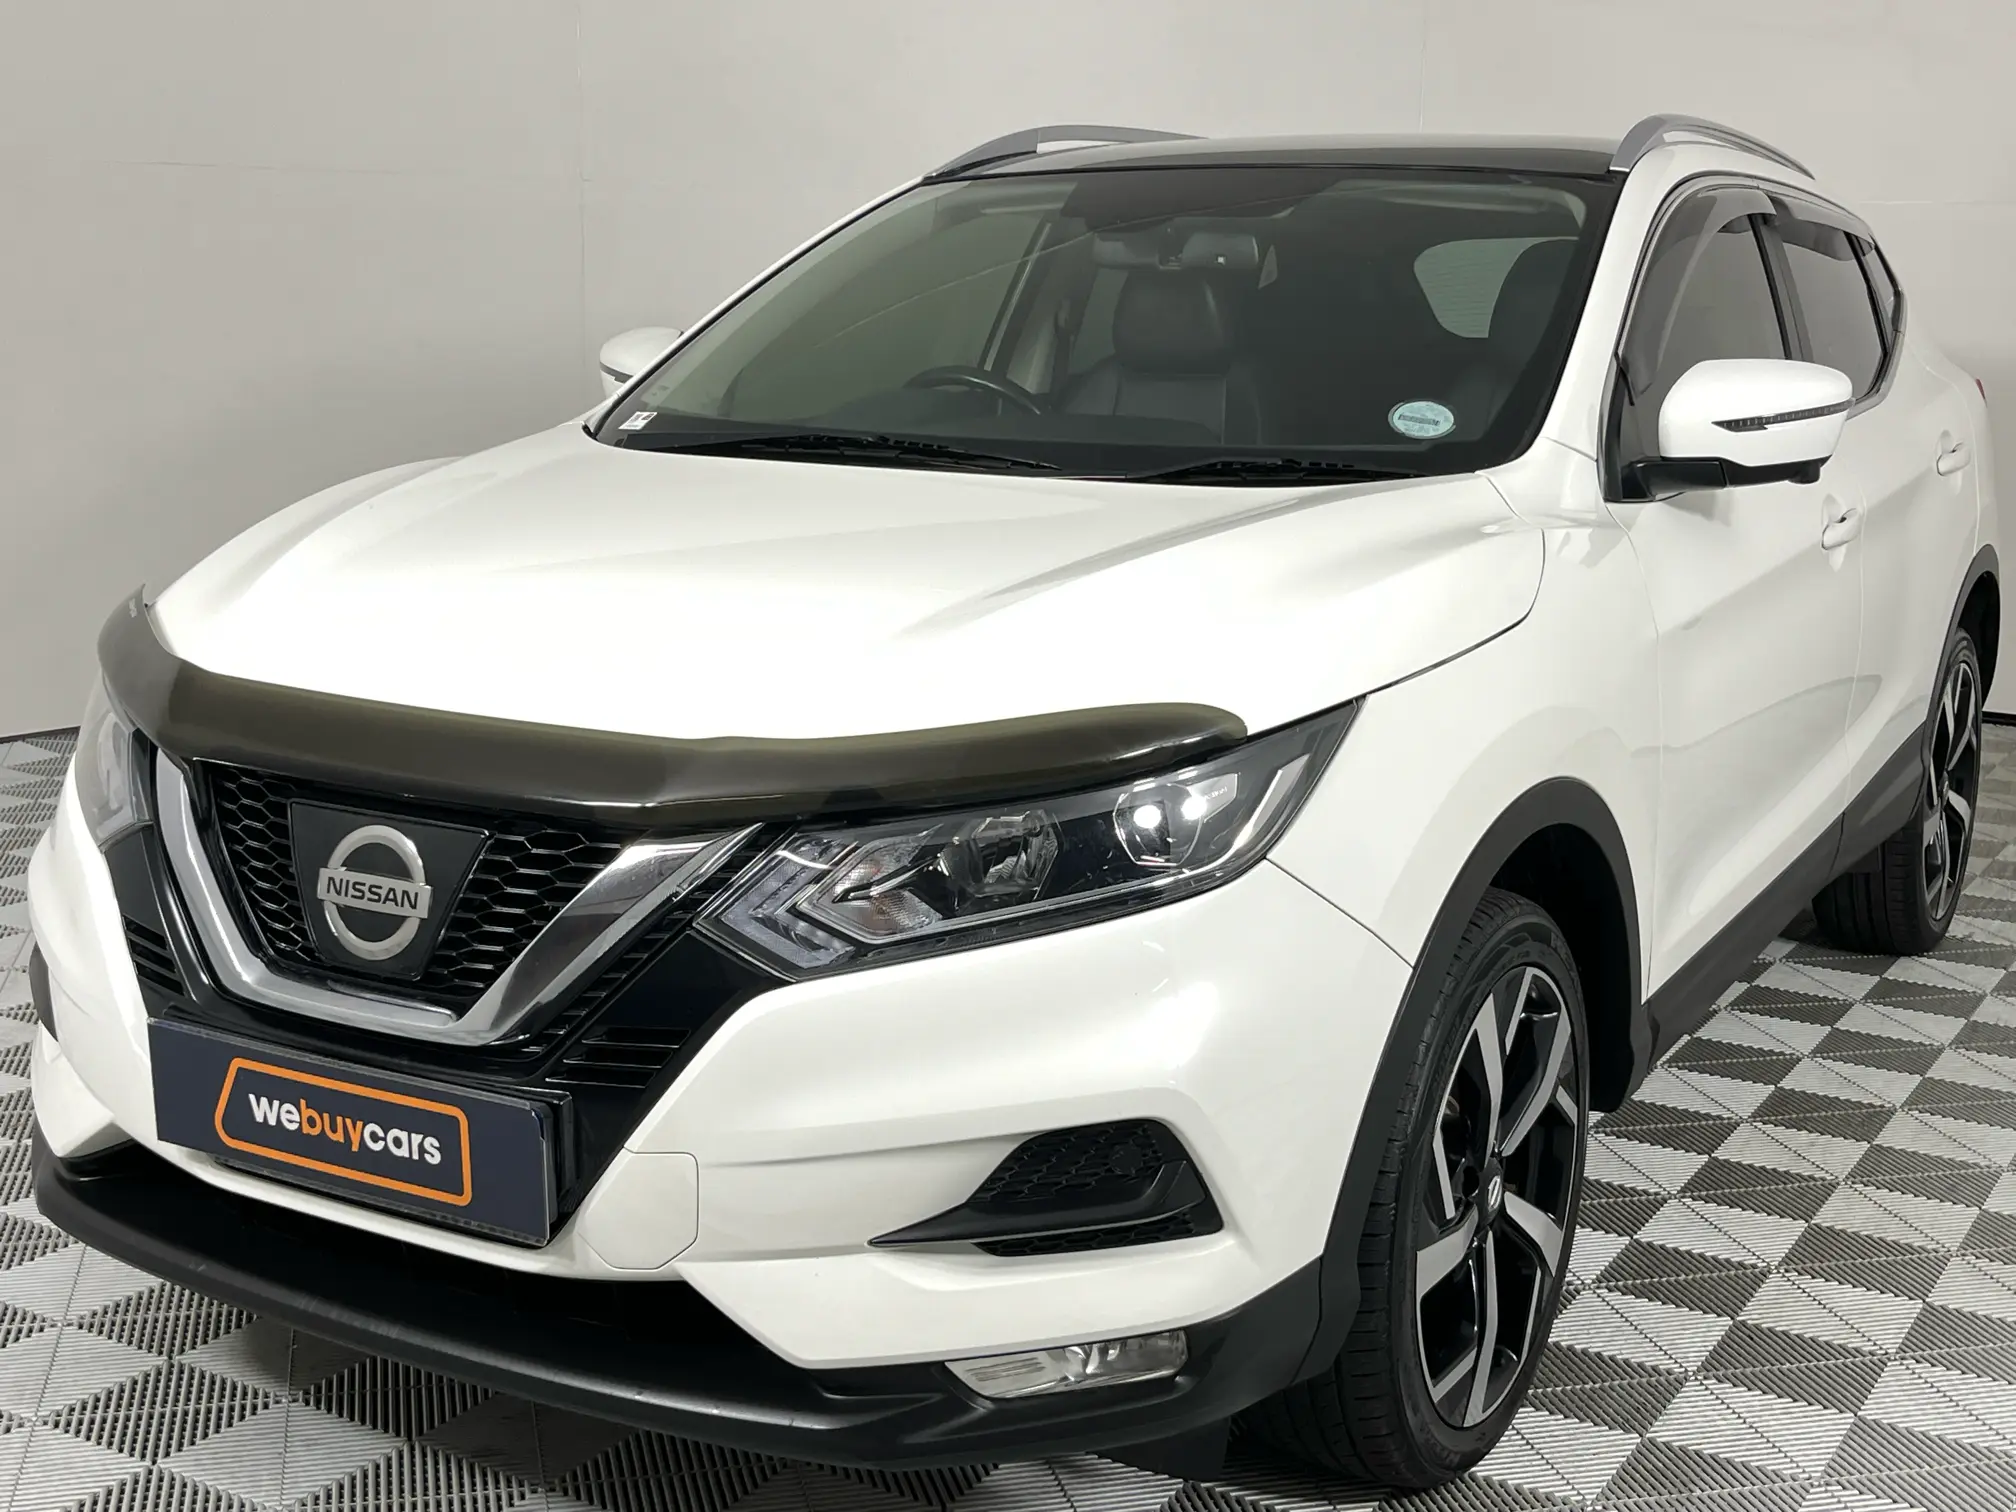 2018 Nissan Qashqai 1.5 DCI Acenta